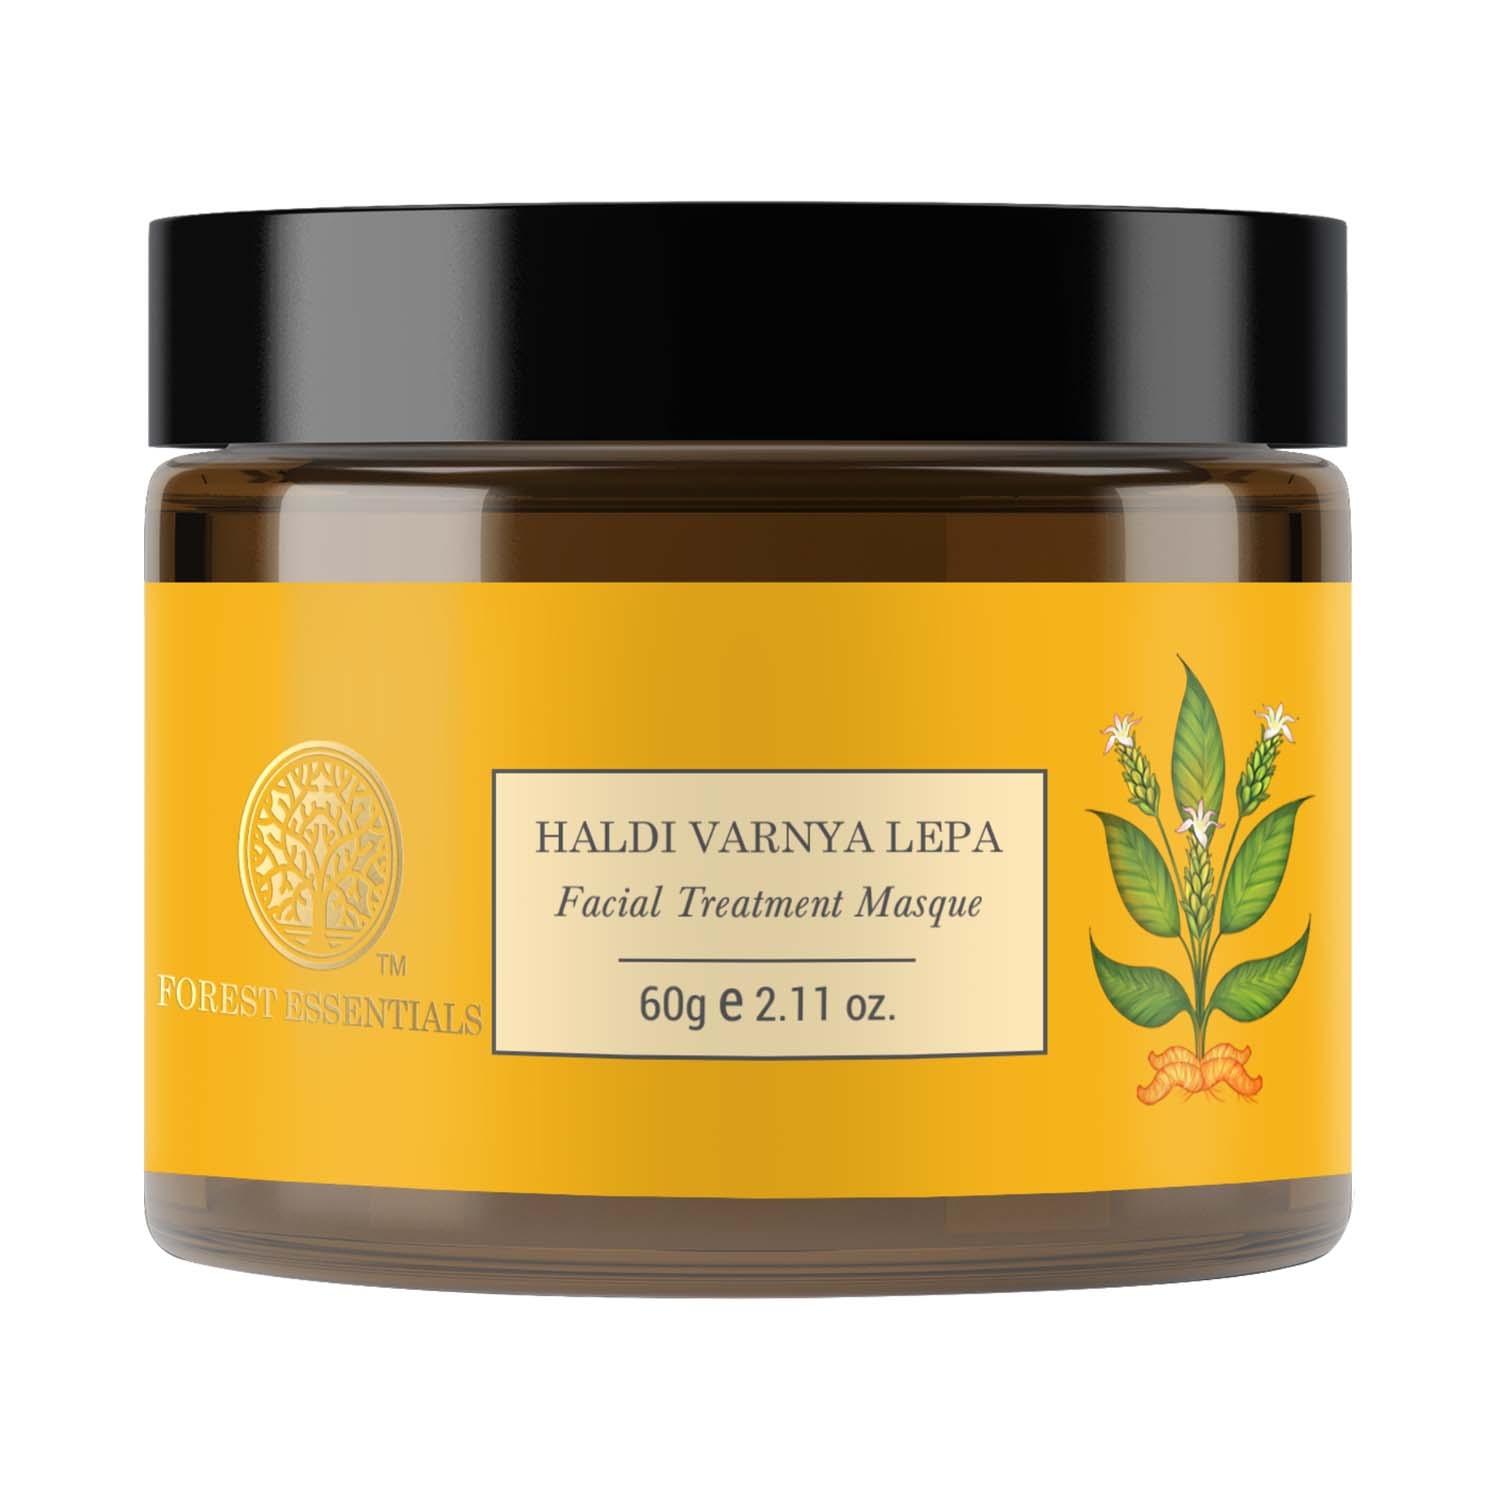 Forest Essentials | Forest Essentials Haldi Varnya Lepa Facial Treatment Masque for Moisturizing (60g)